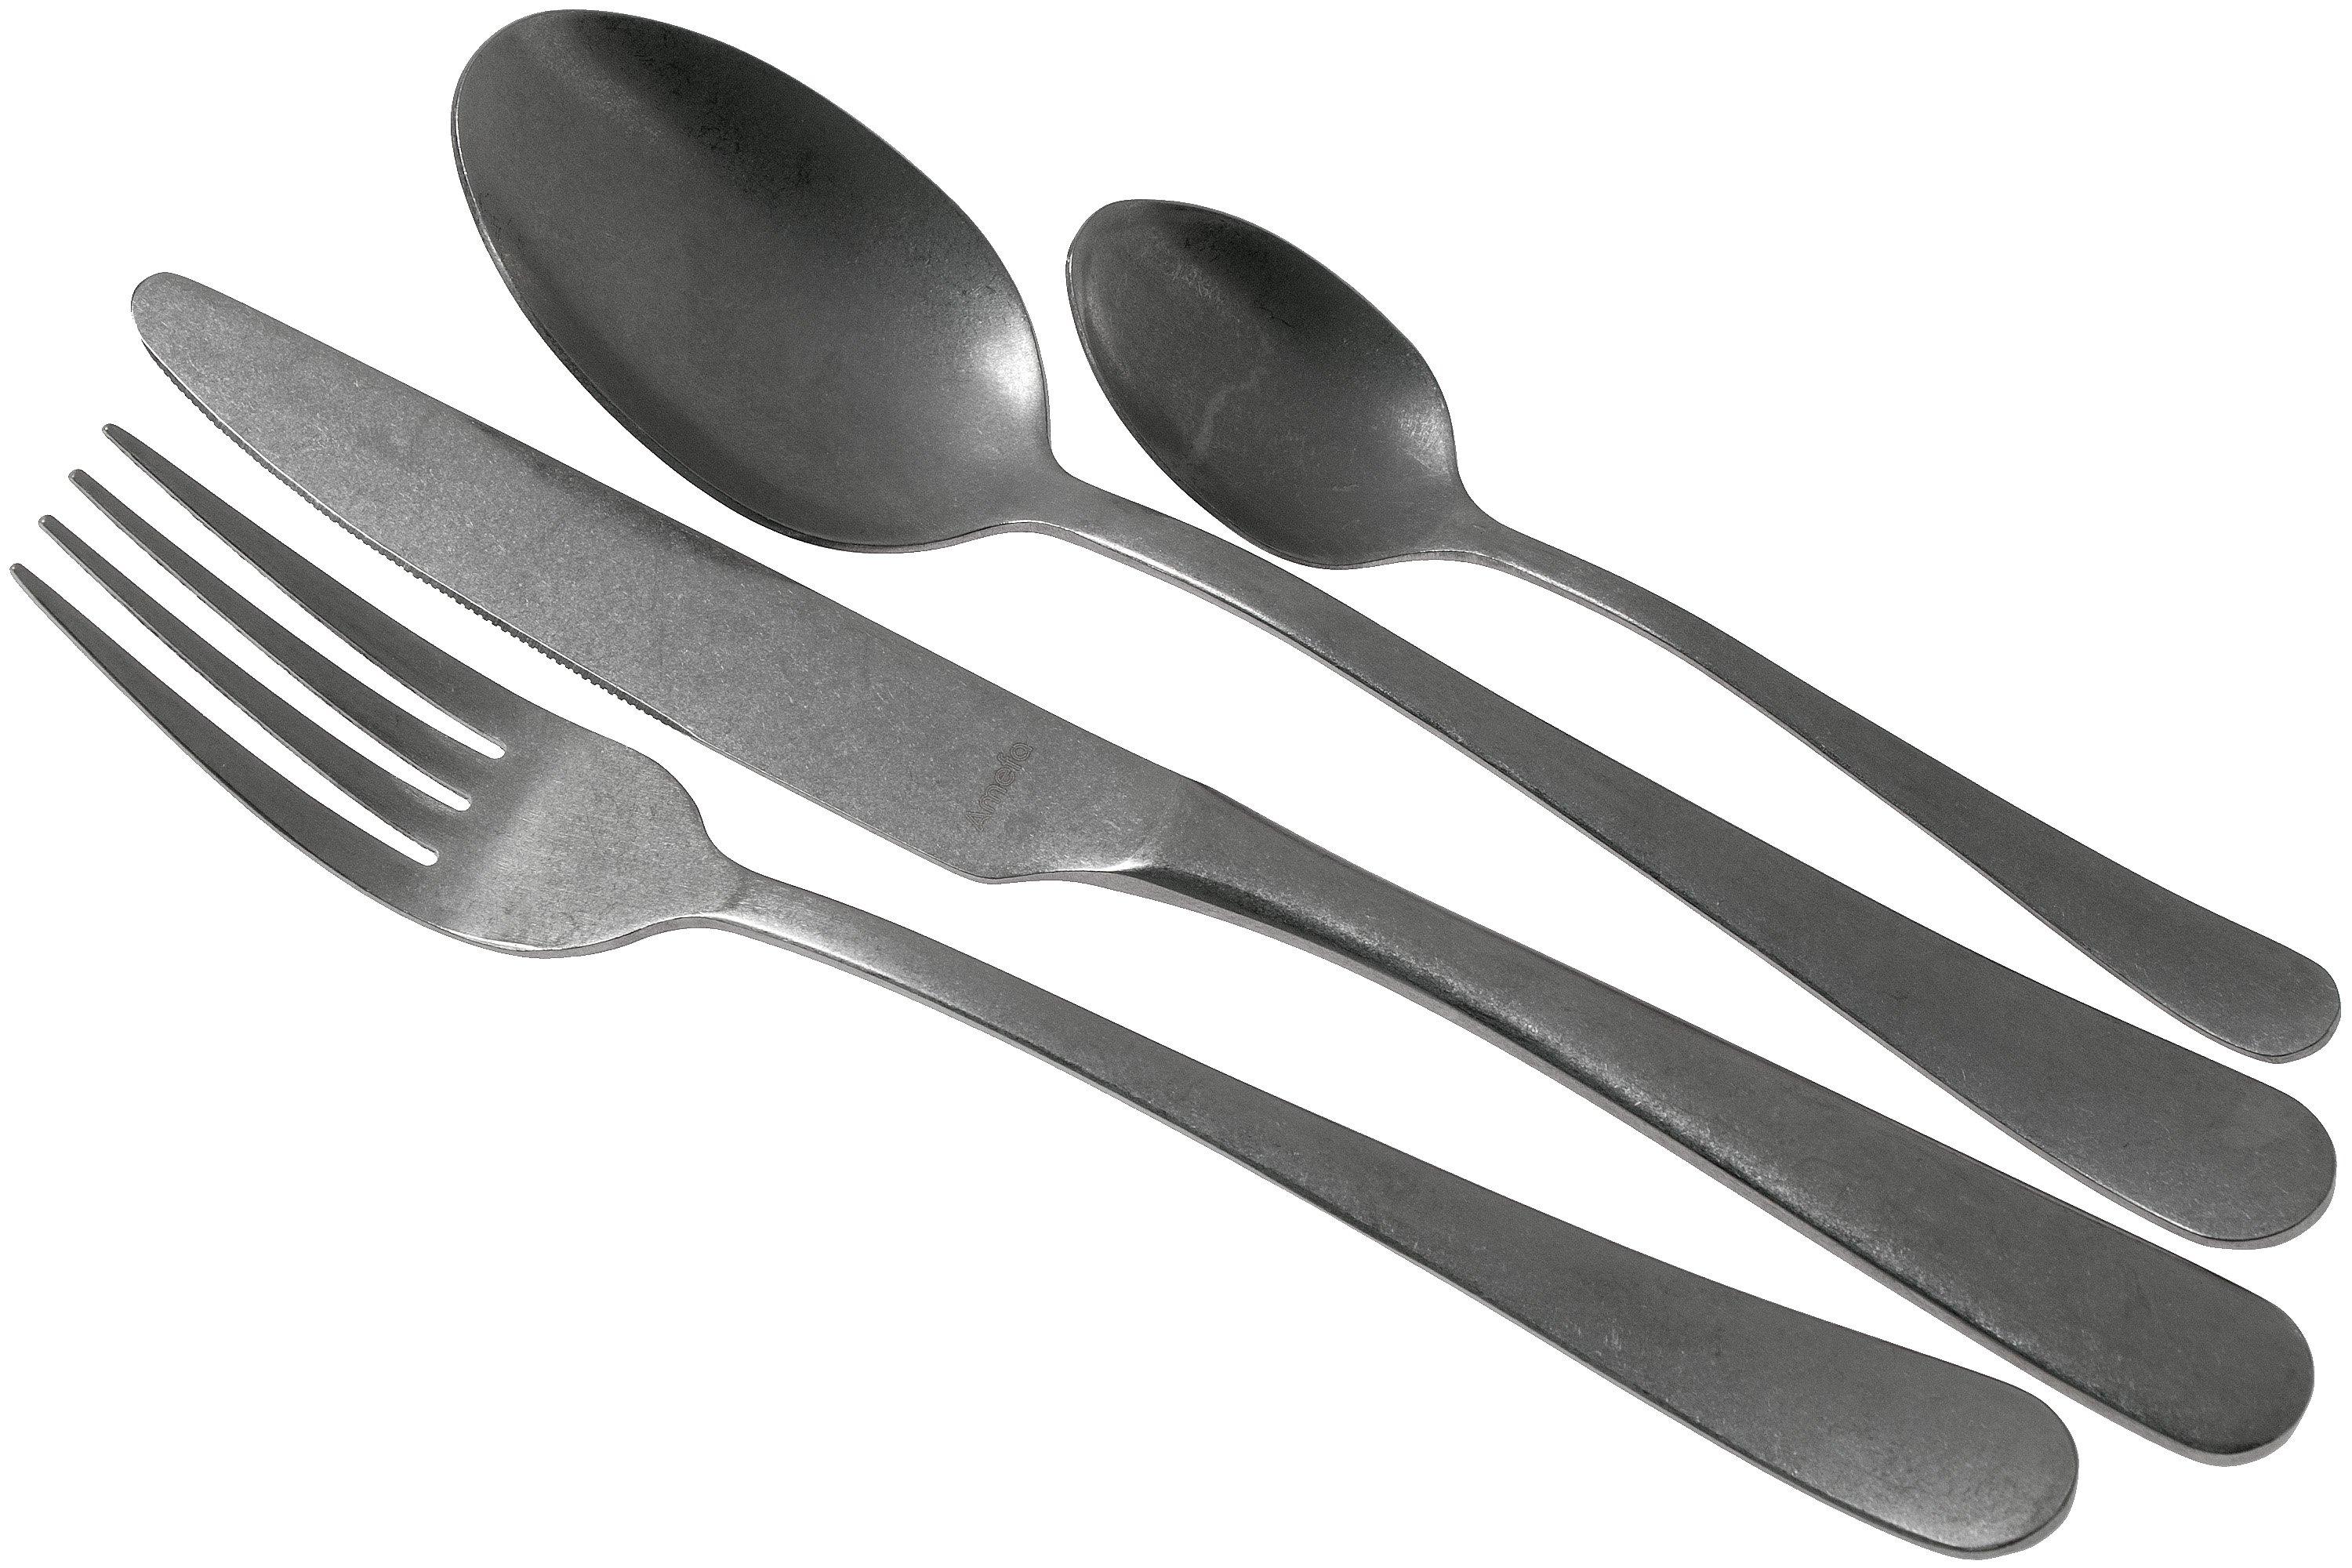 Farberware® 13-piece Cutlery Set